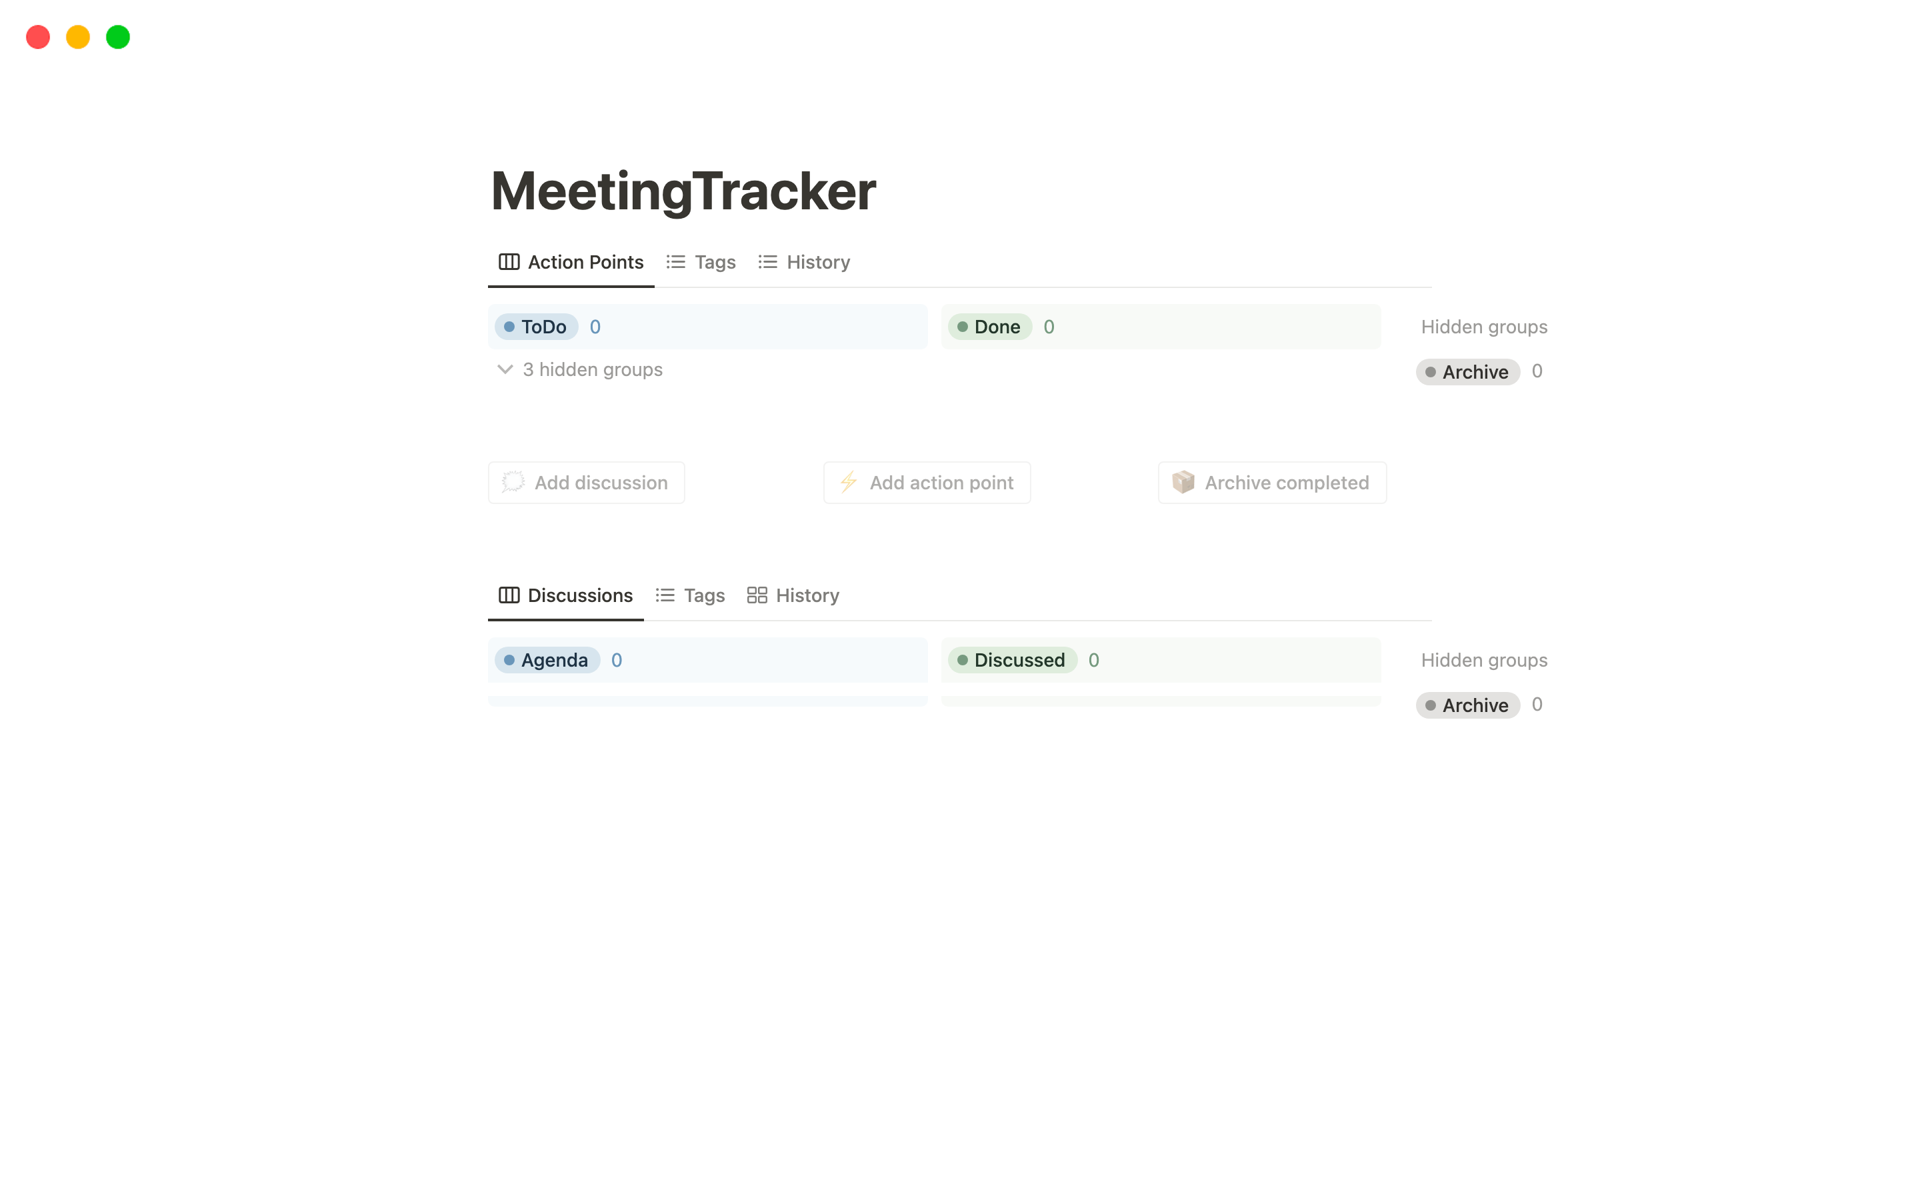 Vista previa de una plantilla para Meeting Tracker